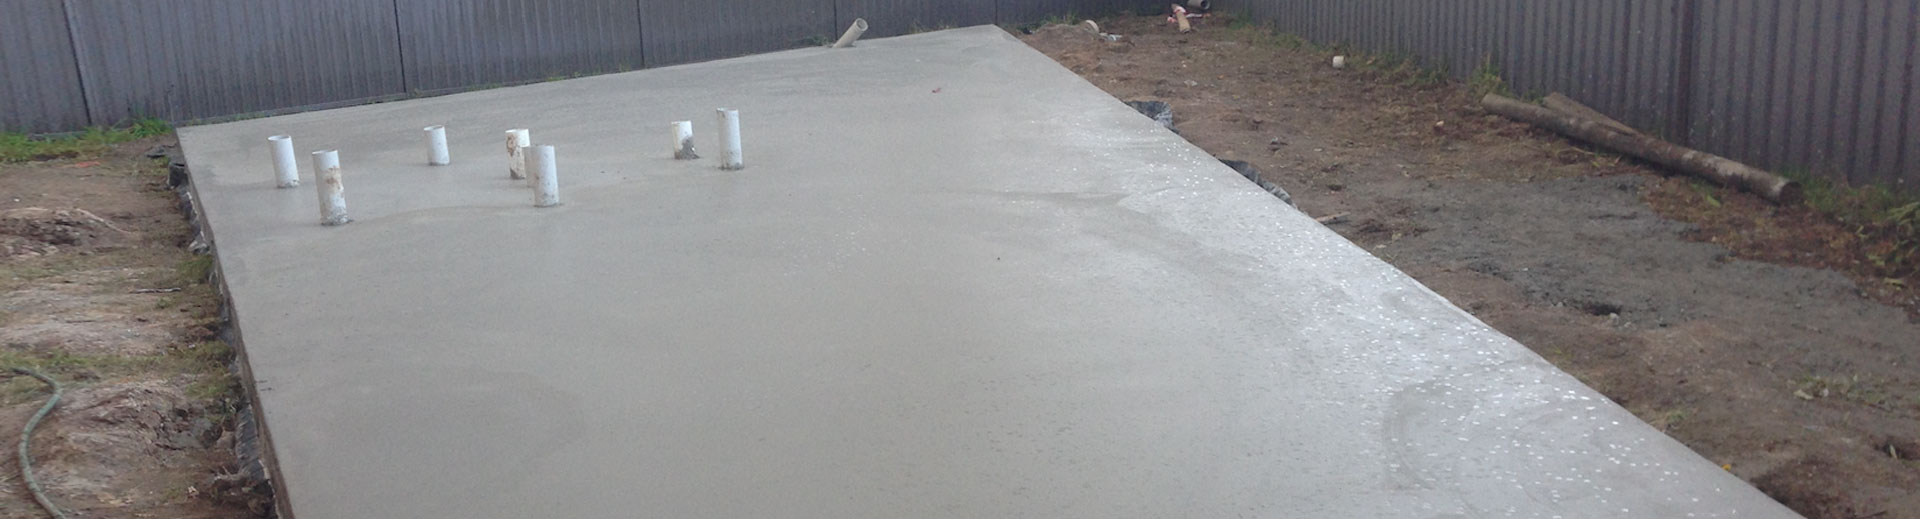 concrete slab for shed